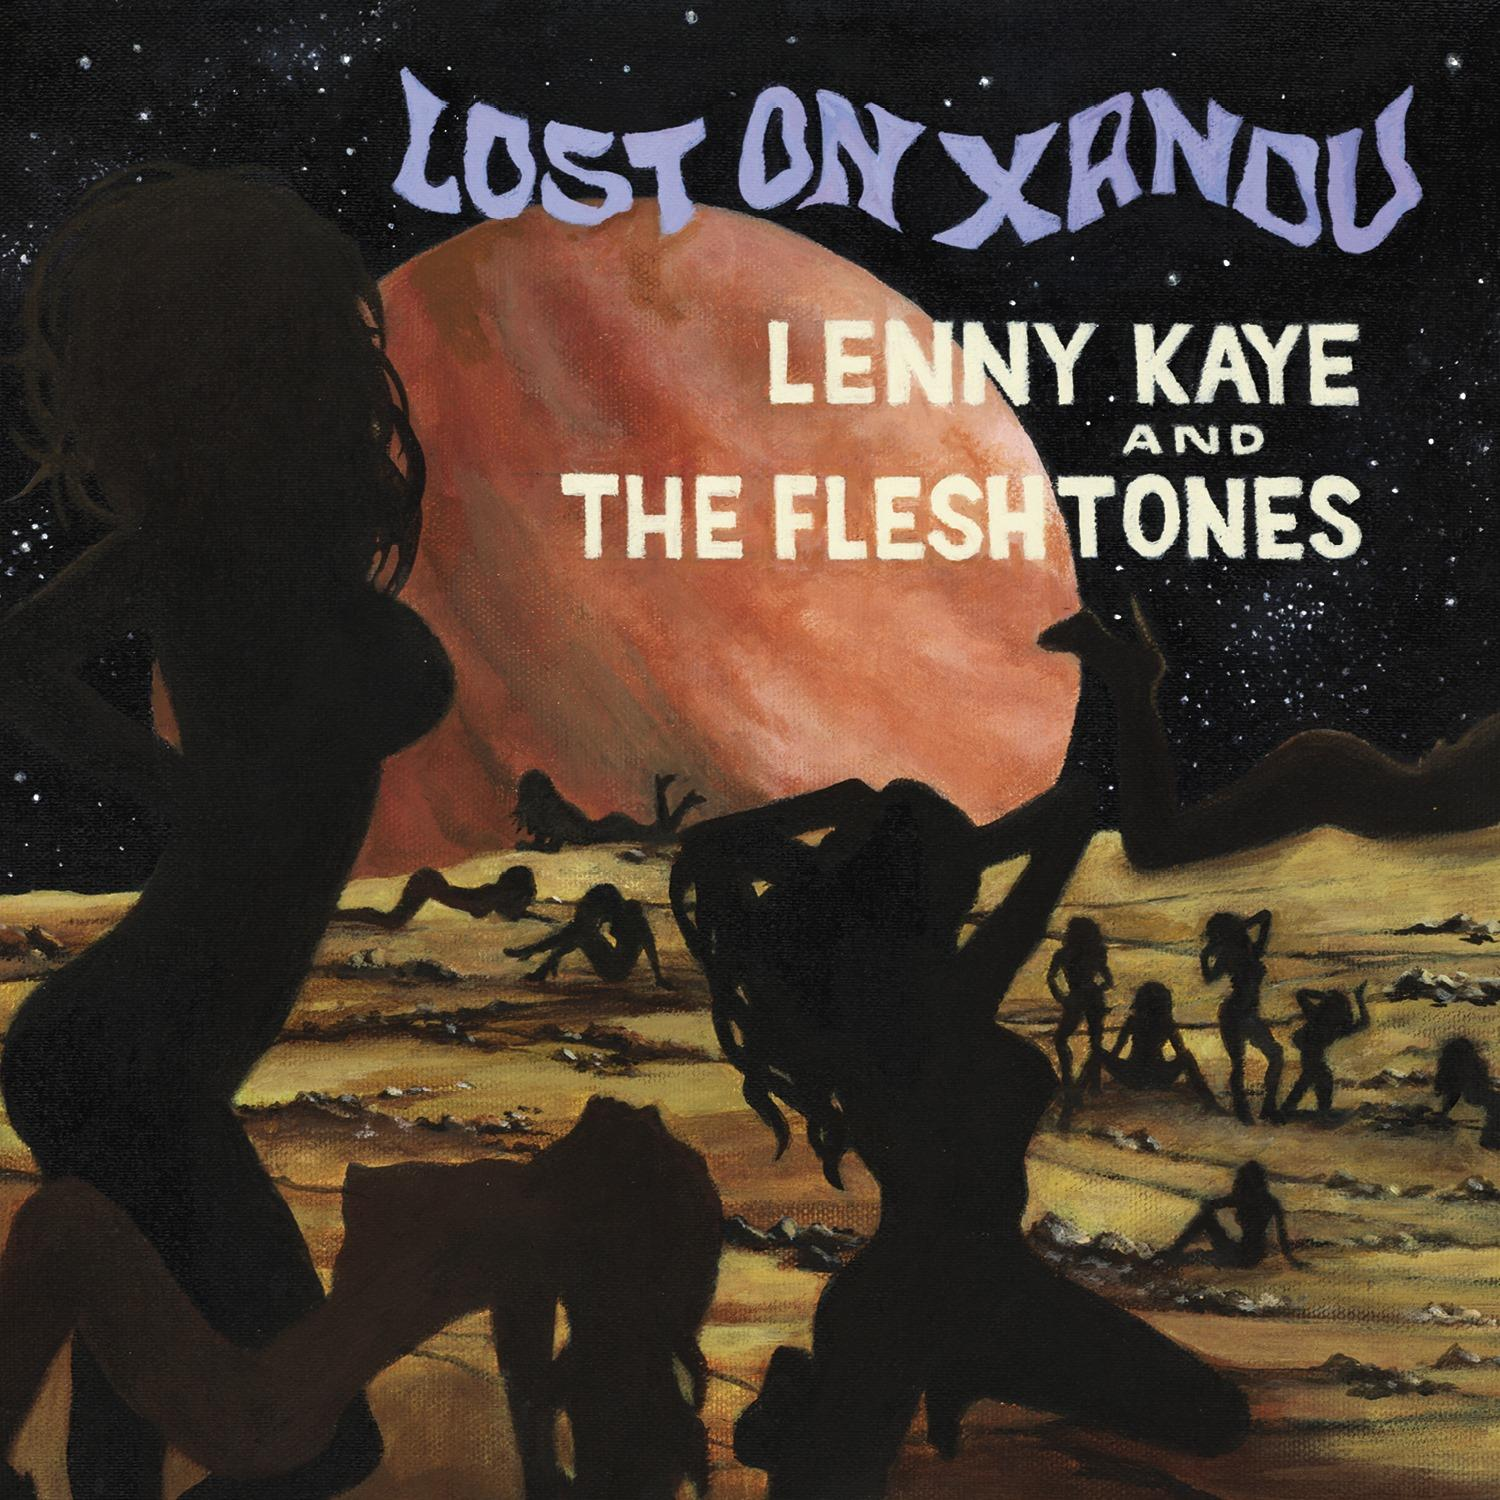 - Lenny 7-LOST The - (Vinyl) Fleshtones XANDU Kaye ON And